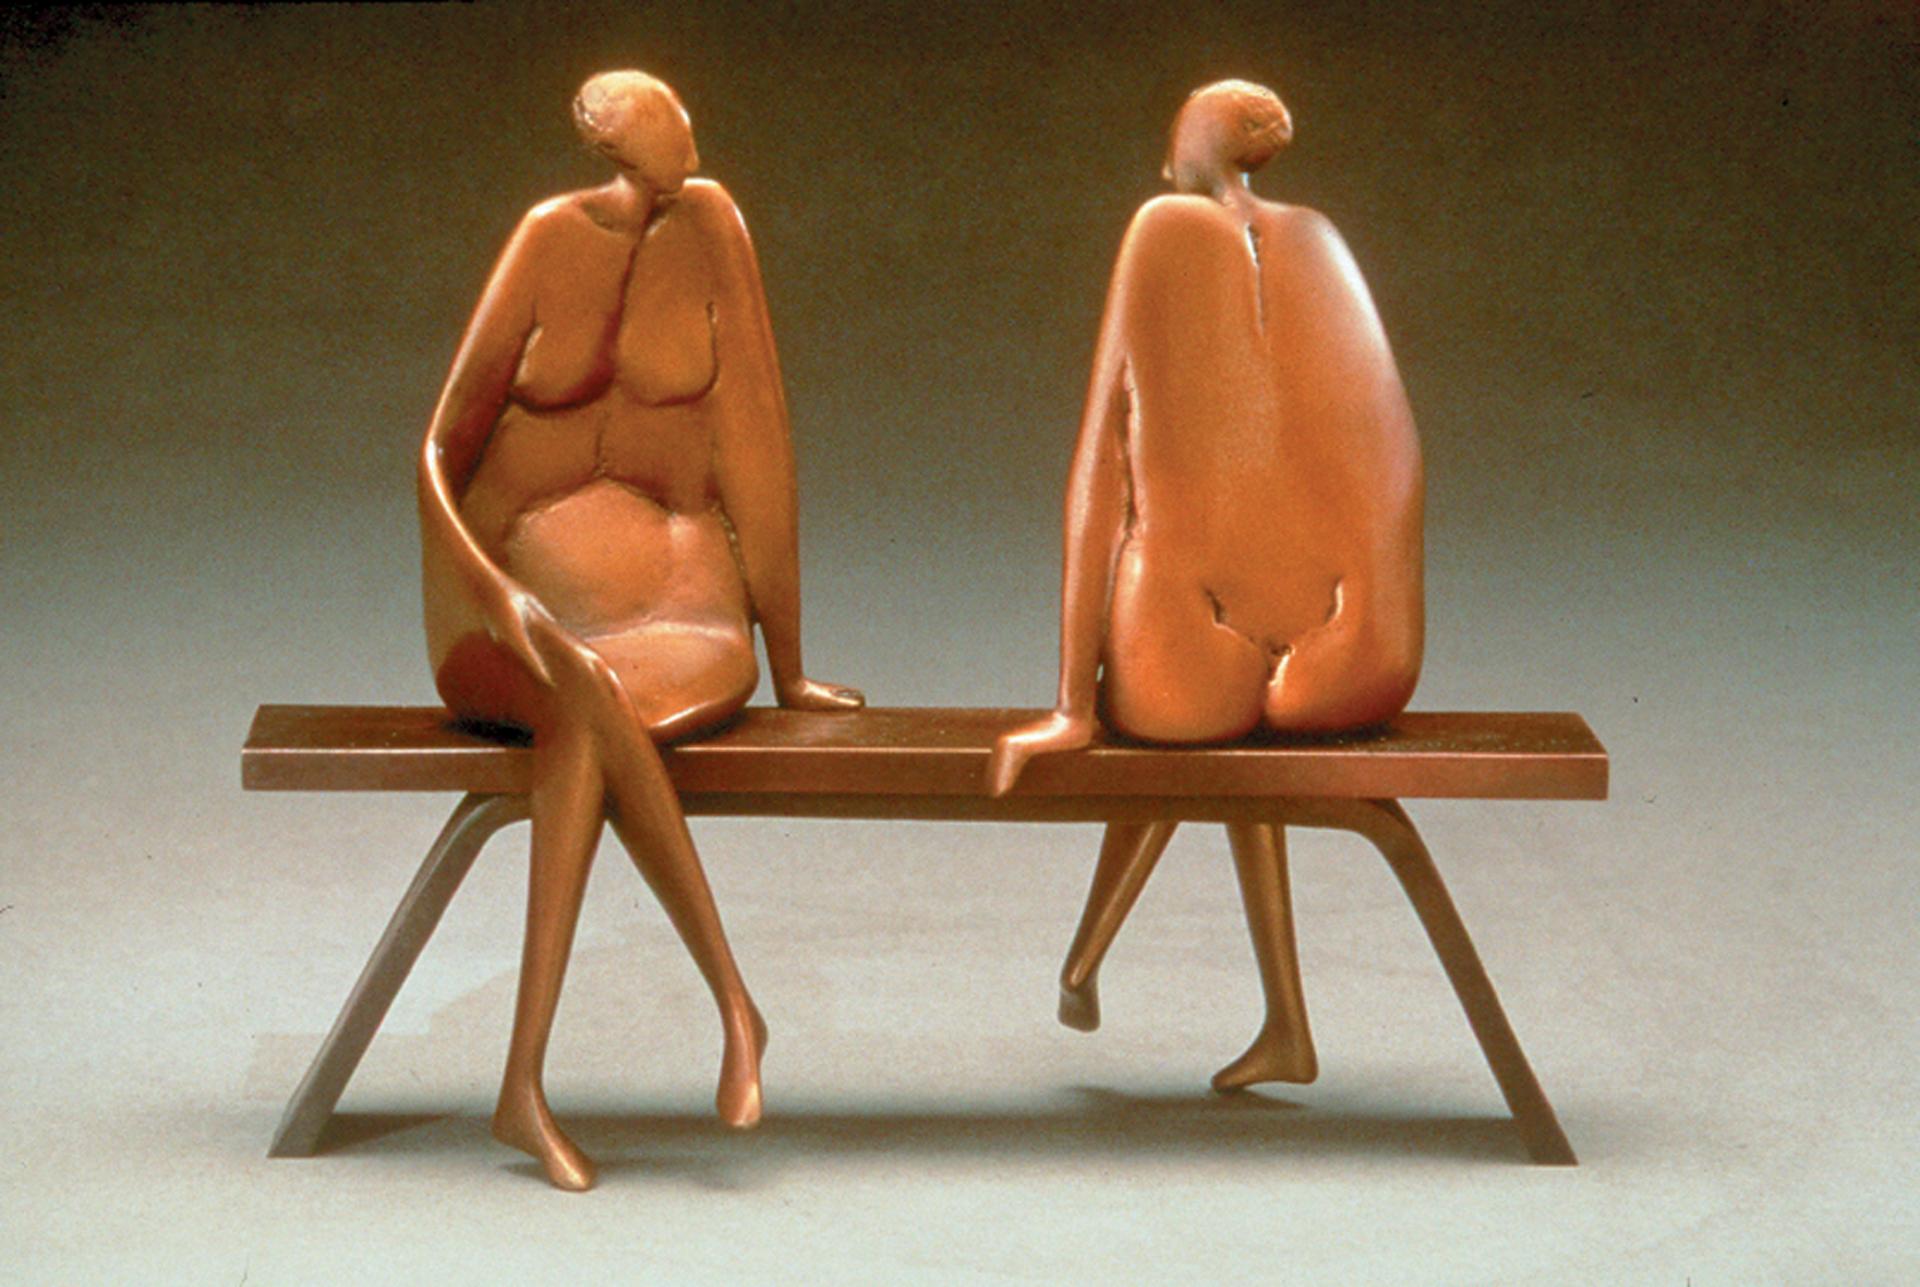 Carol Gold Nude Sculpture - Sisters